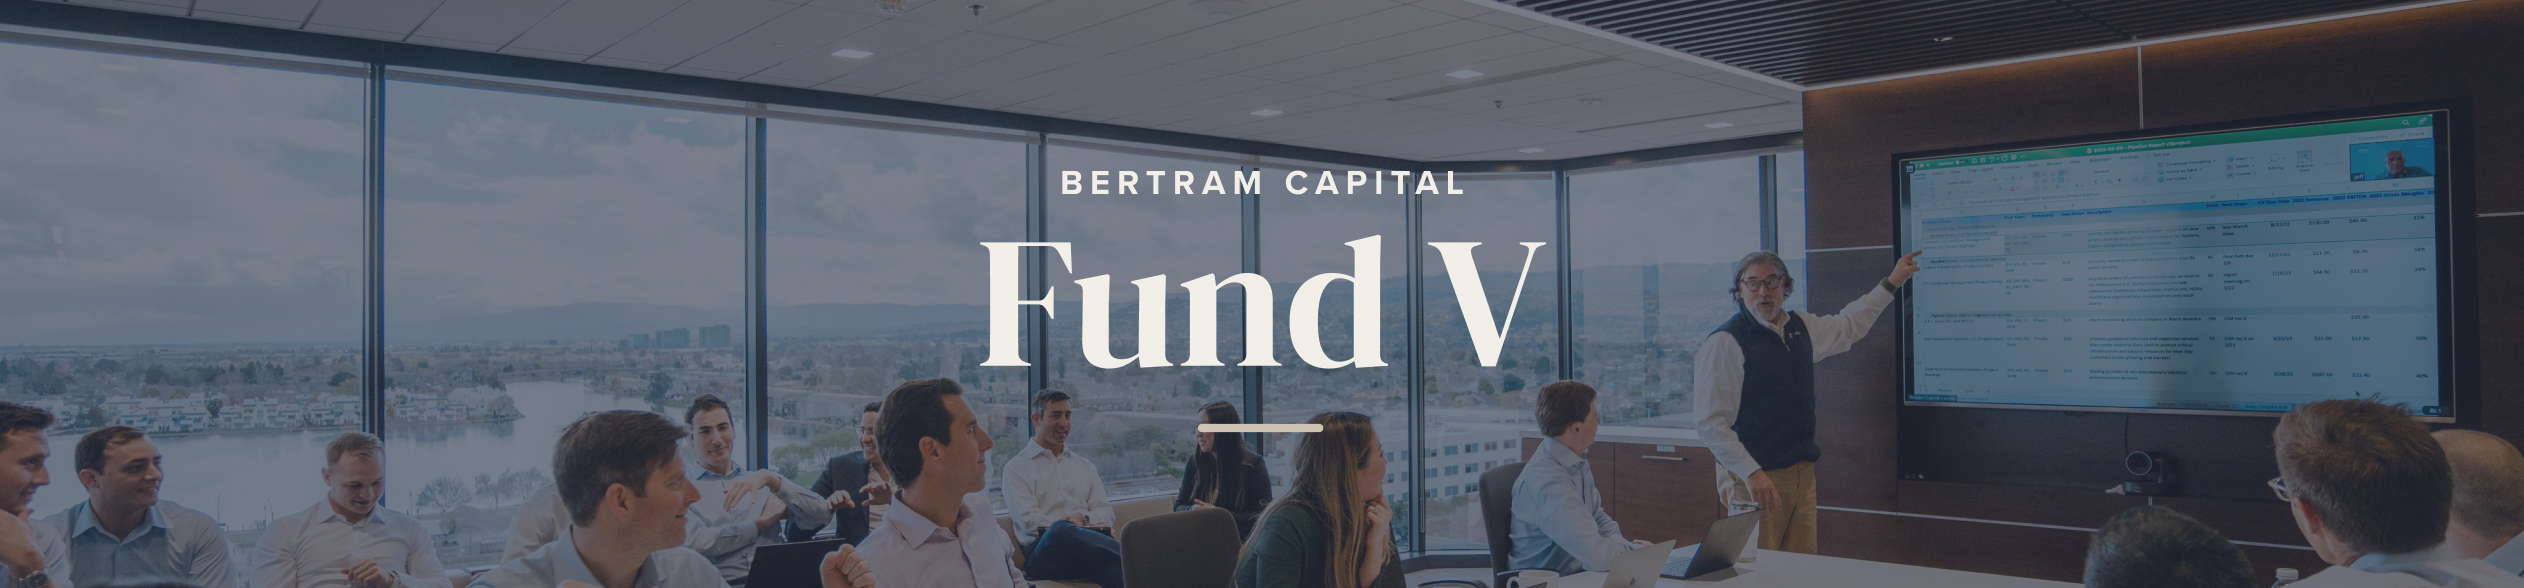 Bertram Capital Fund V